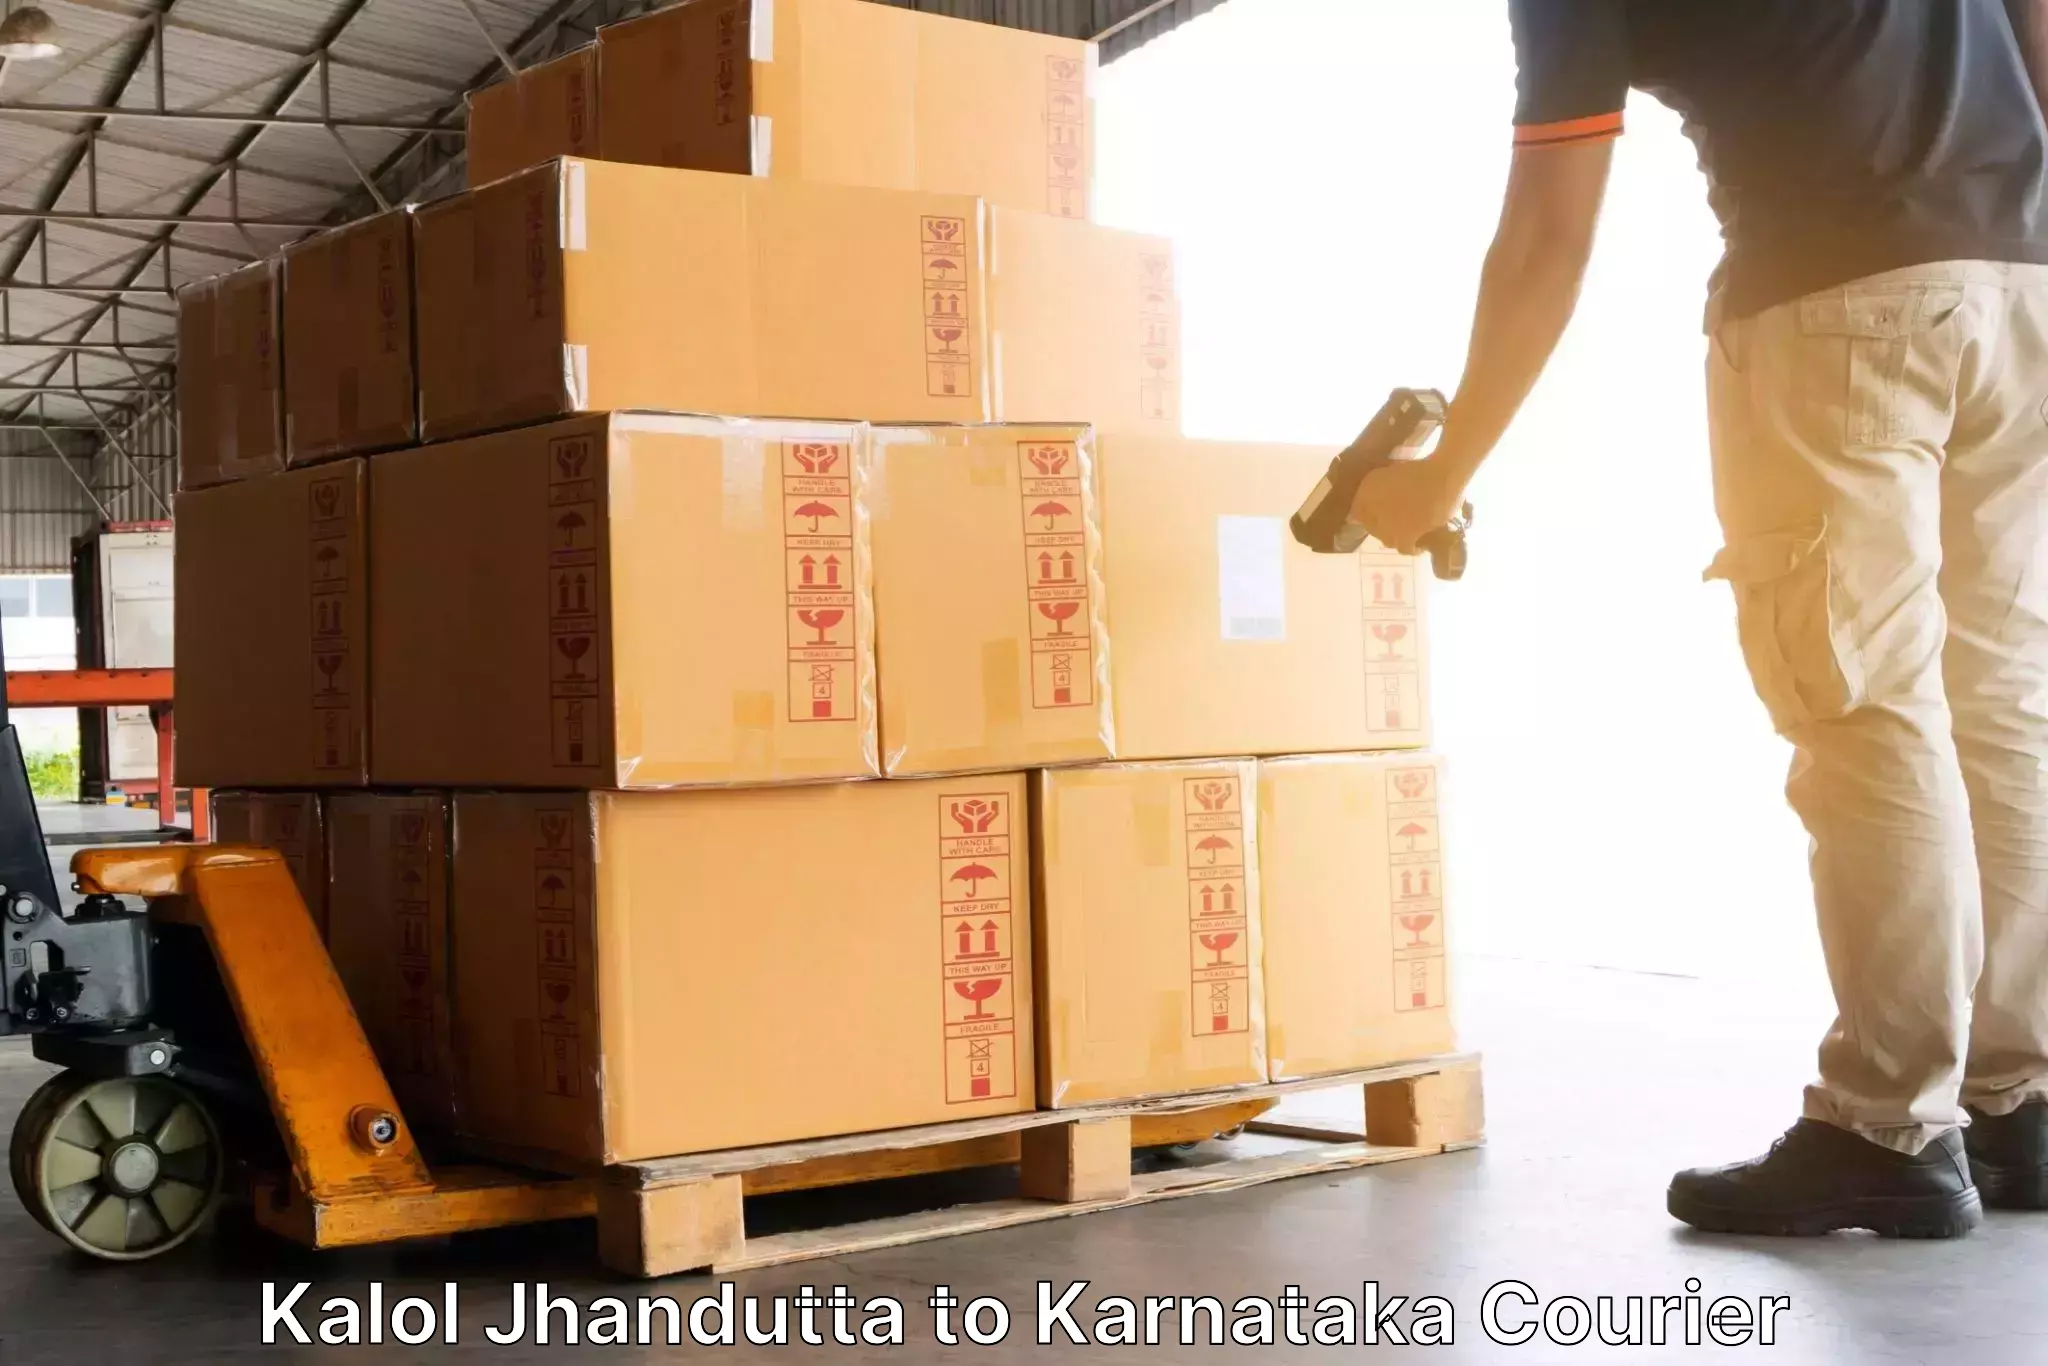 24/7 courier service in Kalol Jhandutta to Sindagi